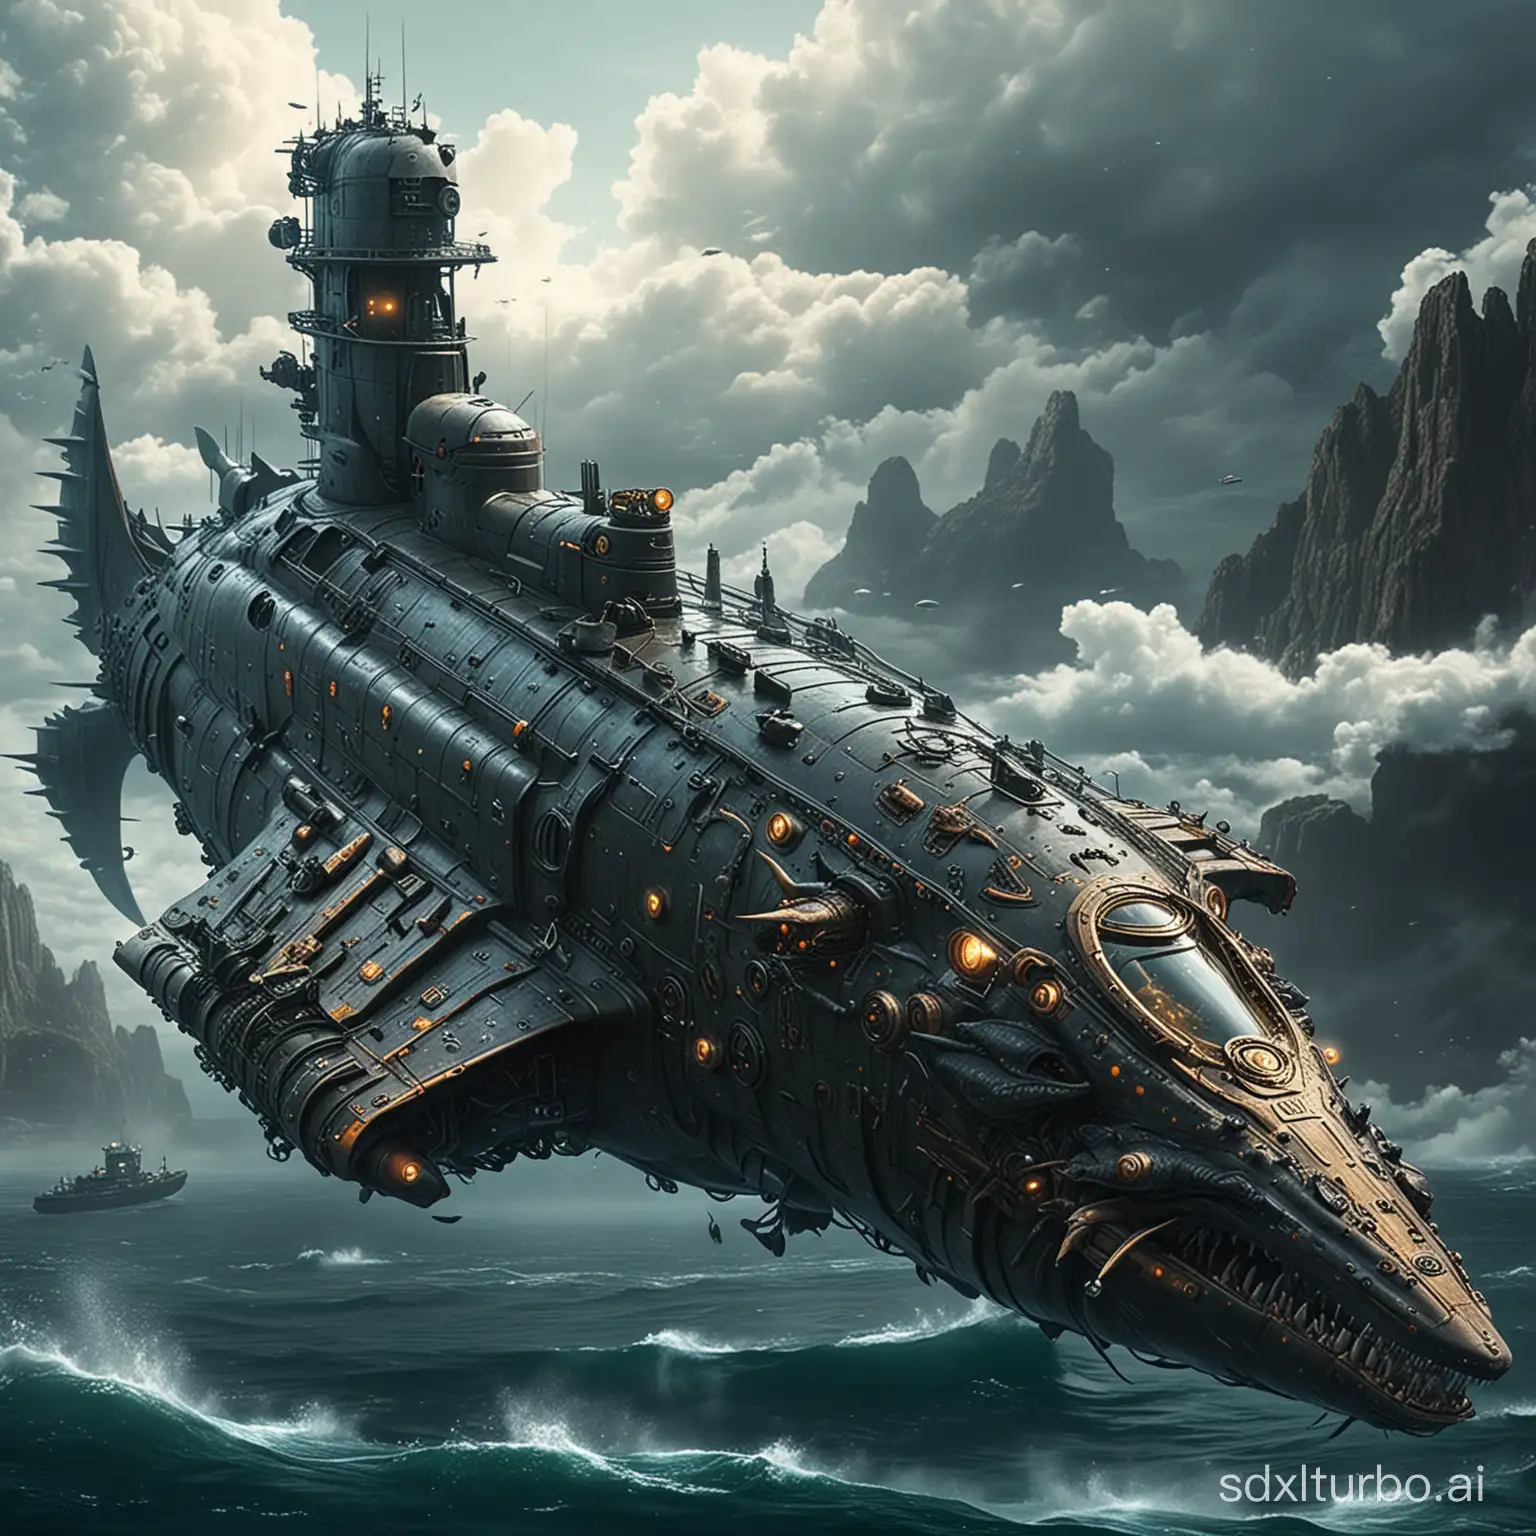 Futuristic-Dragon-Submarine-Exploring-the-Depths-of-Science-Fiction-Seas